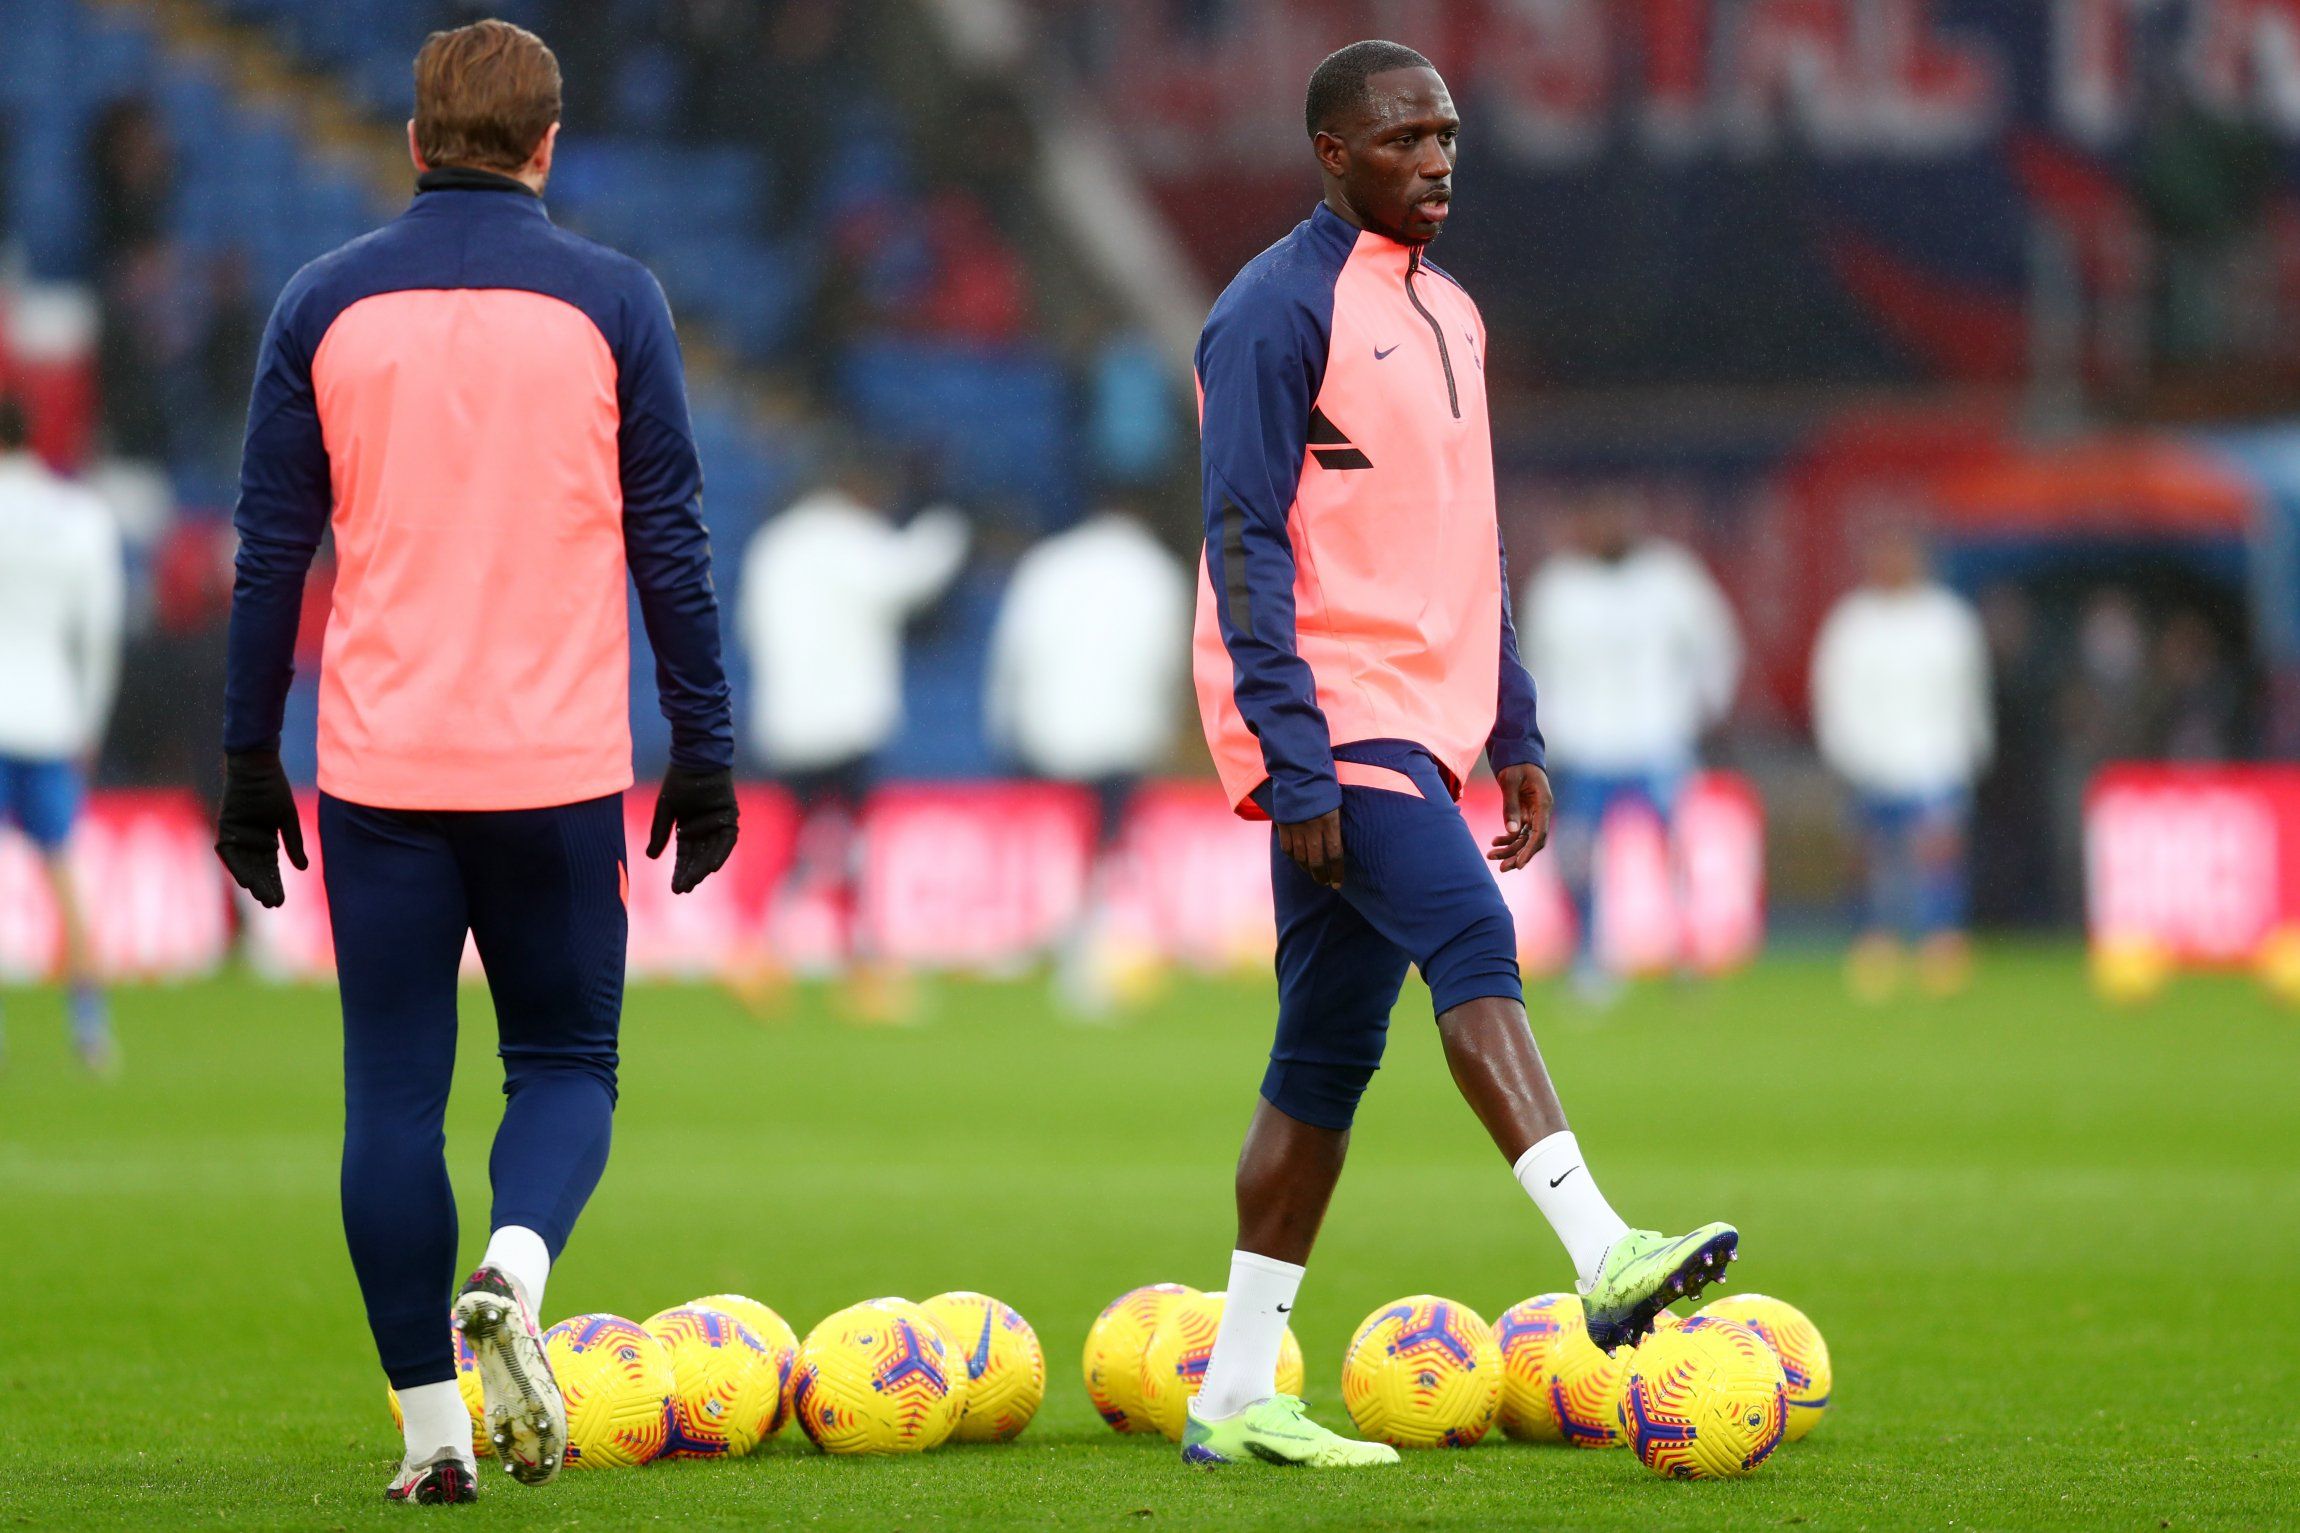 spurs midfielder moussa sissoko in warm up against palace premier league